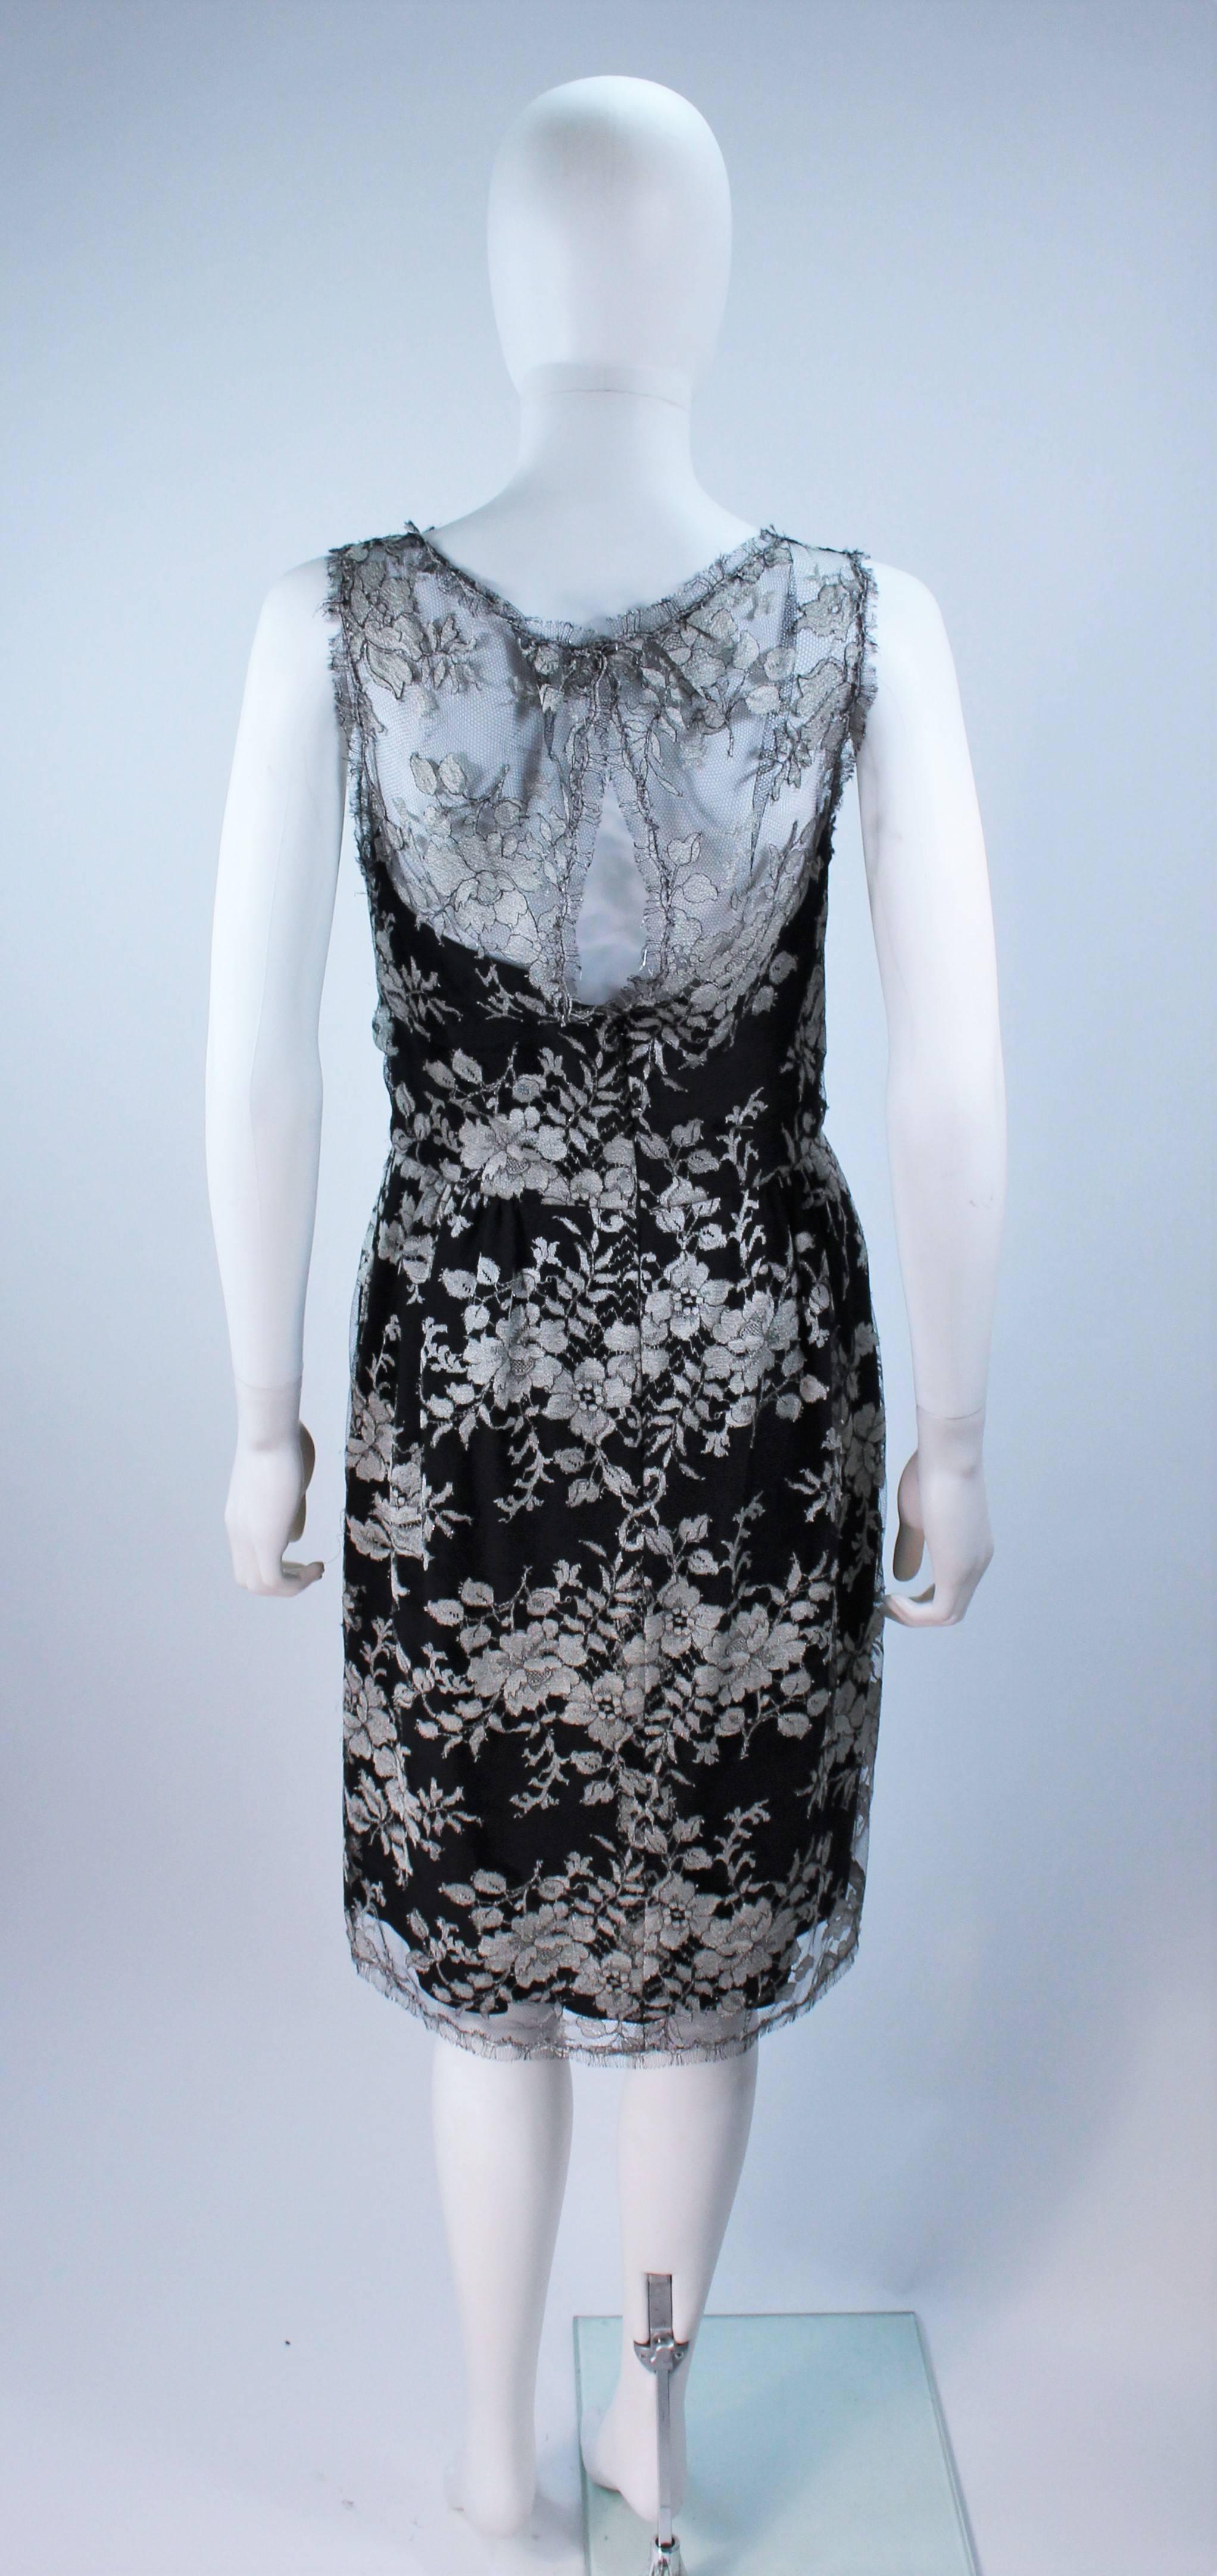 MONIQUE LHUILLER Black and Silver Lace Cocktail Dress Size 10 For Sale 1